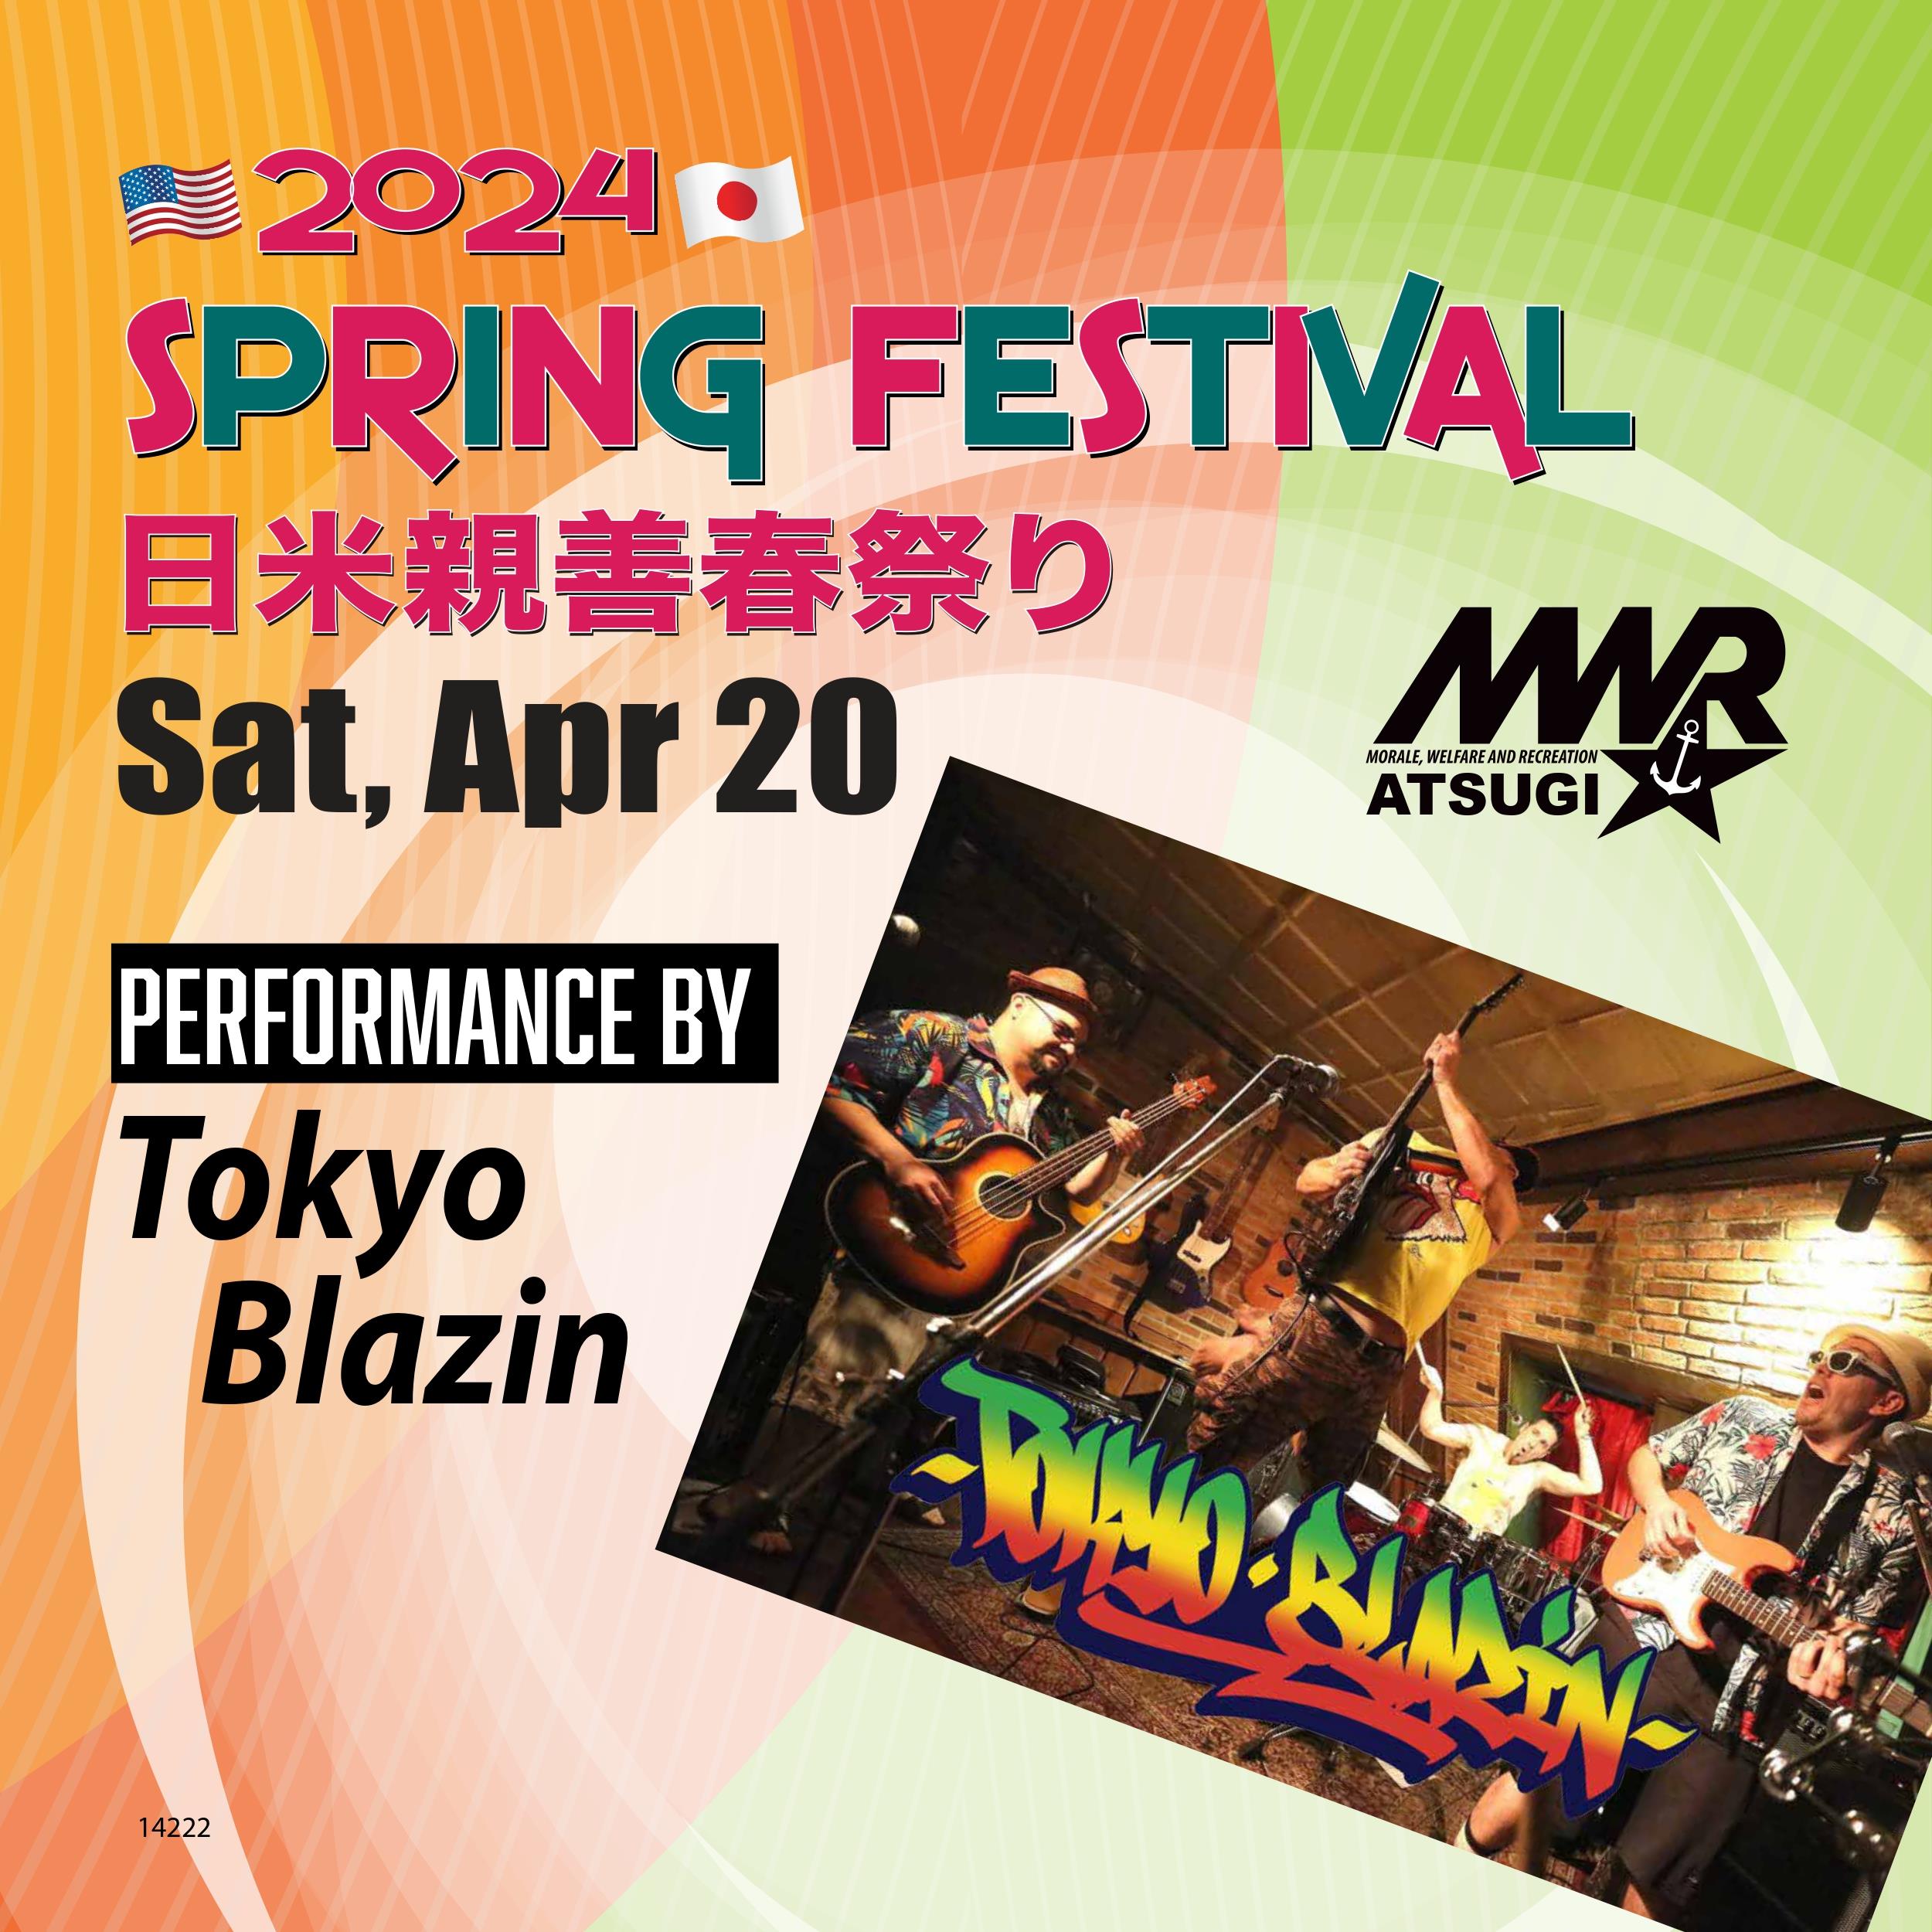 Tokyo Blazin Band